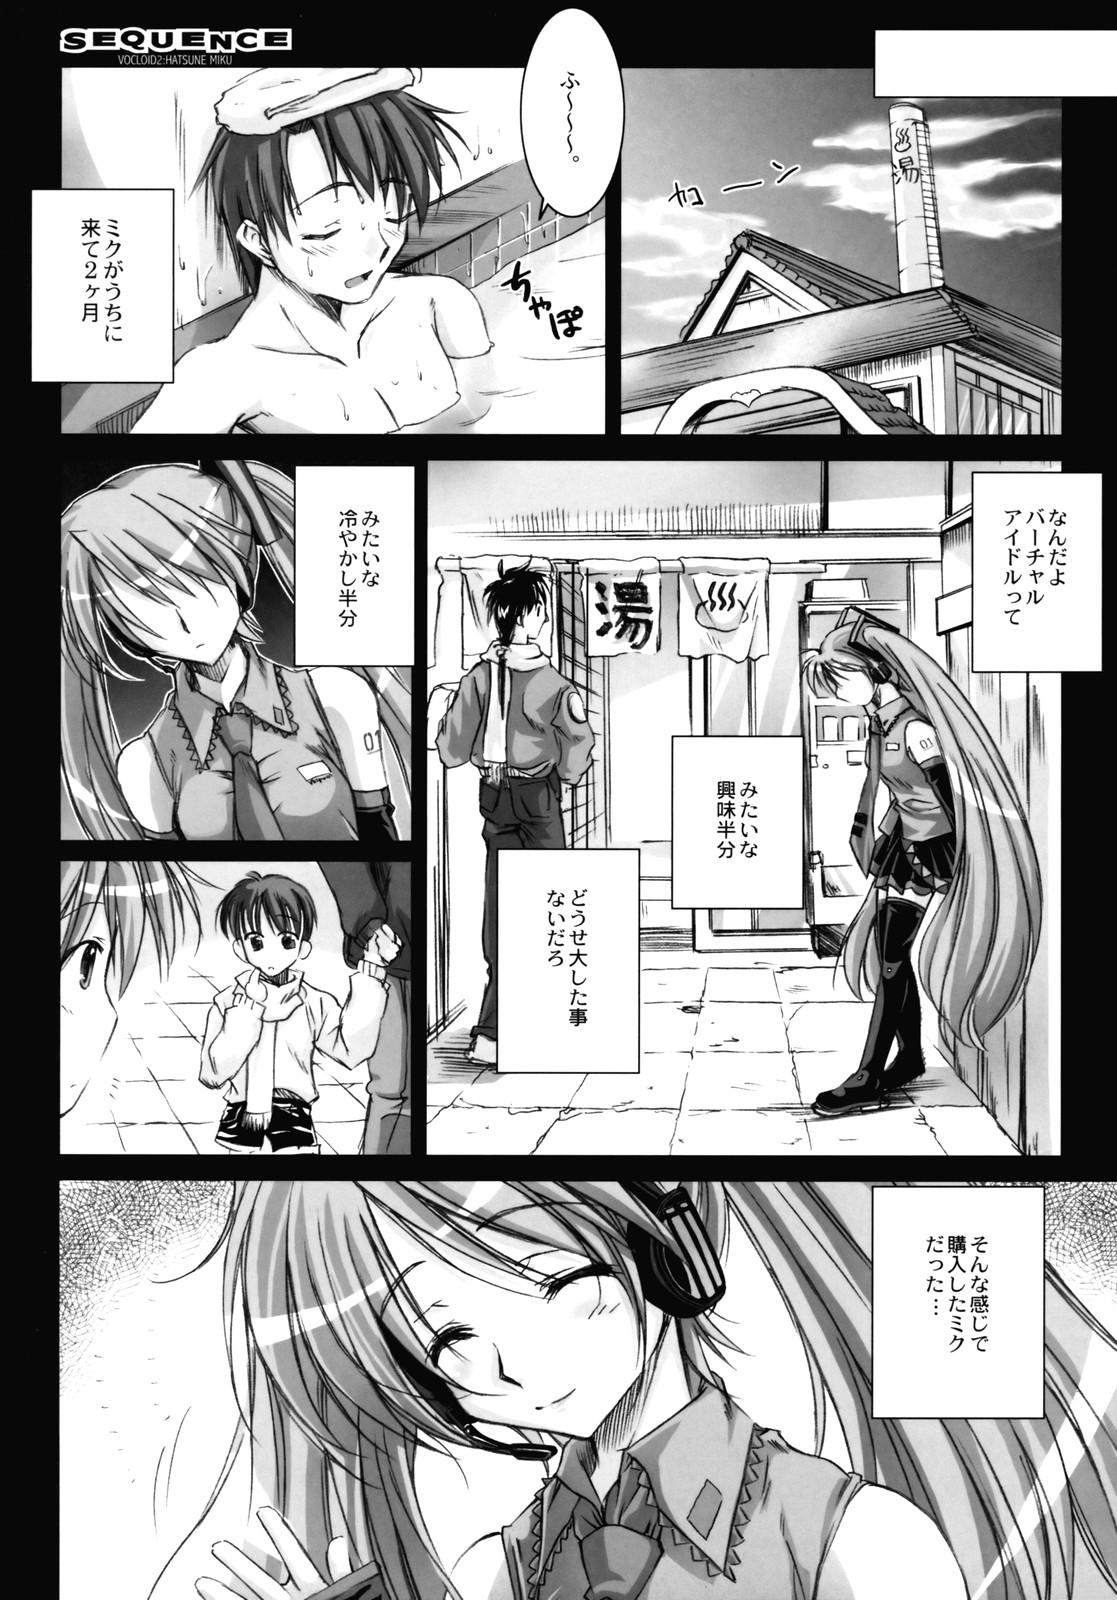 Dando SEQUENCE - Vocaloid Chaturbate - Page 6